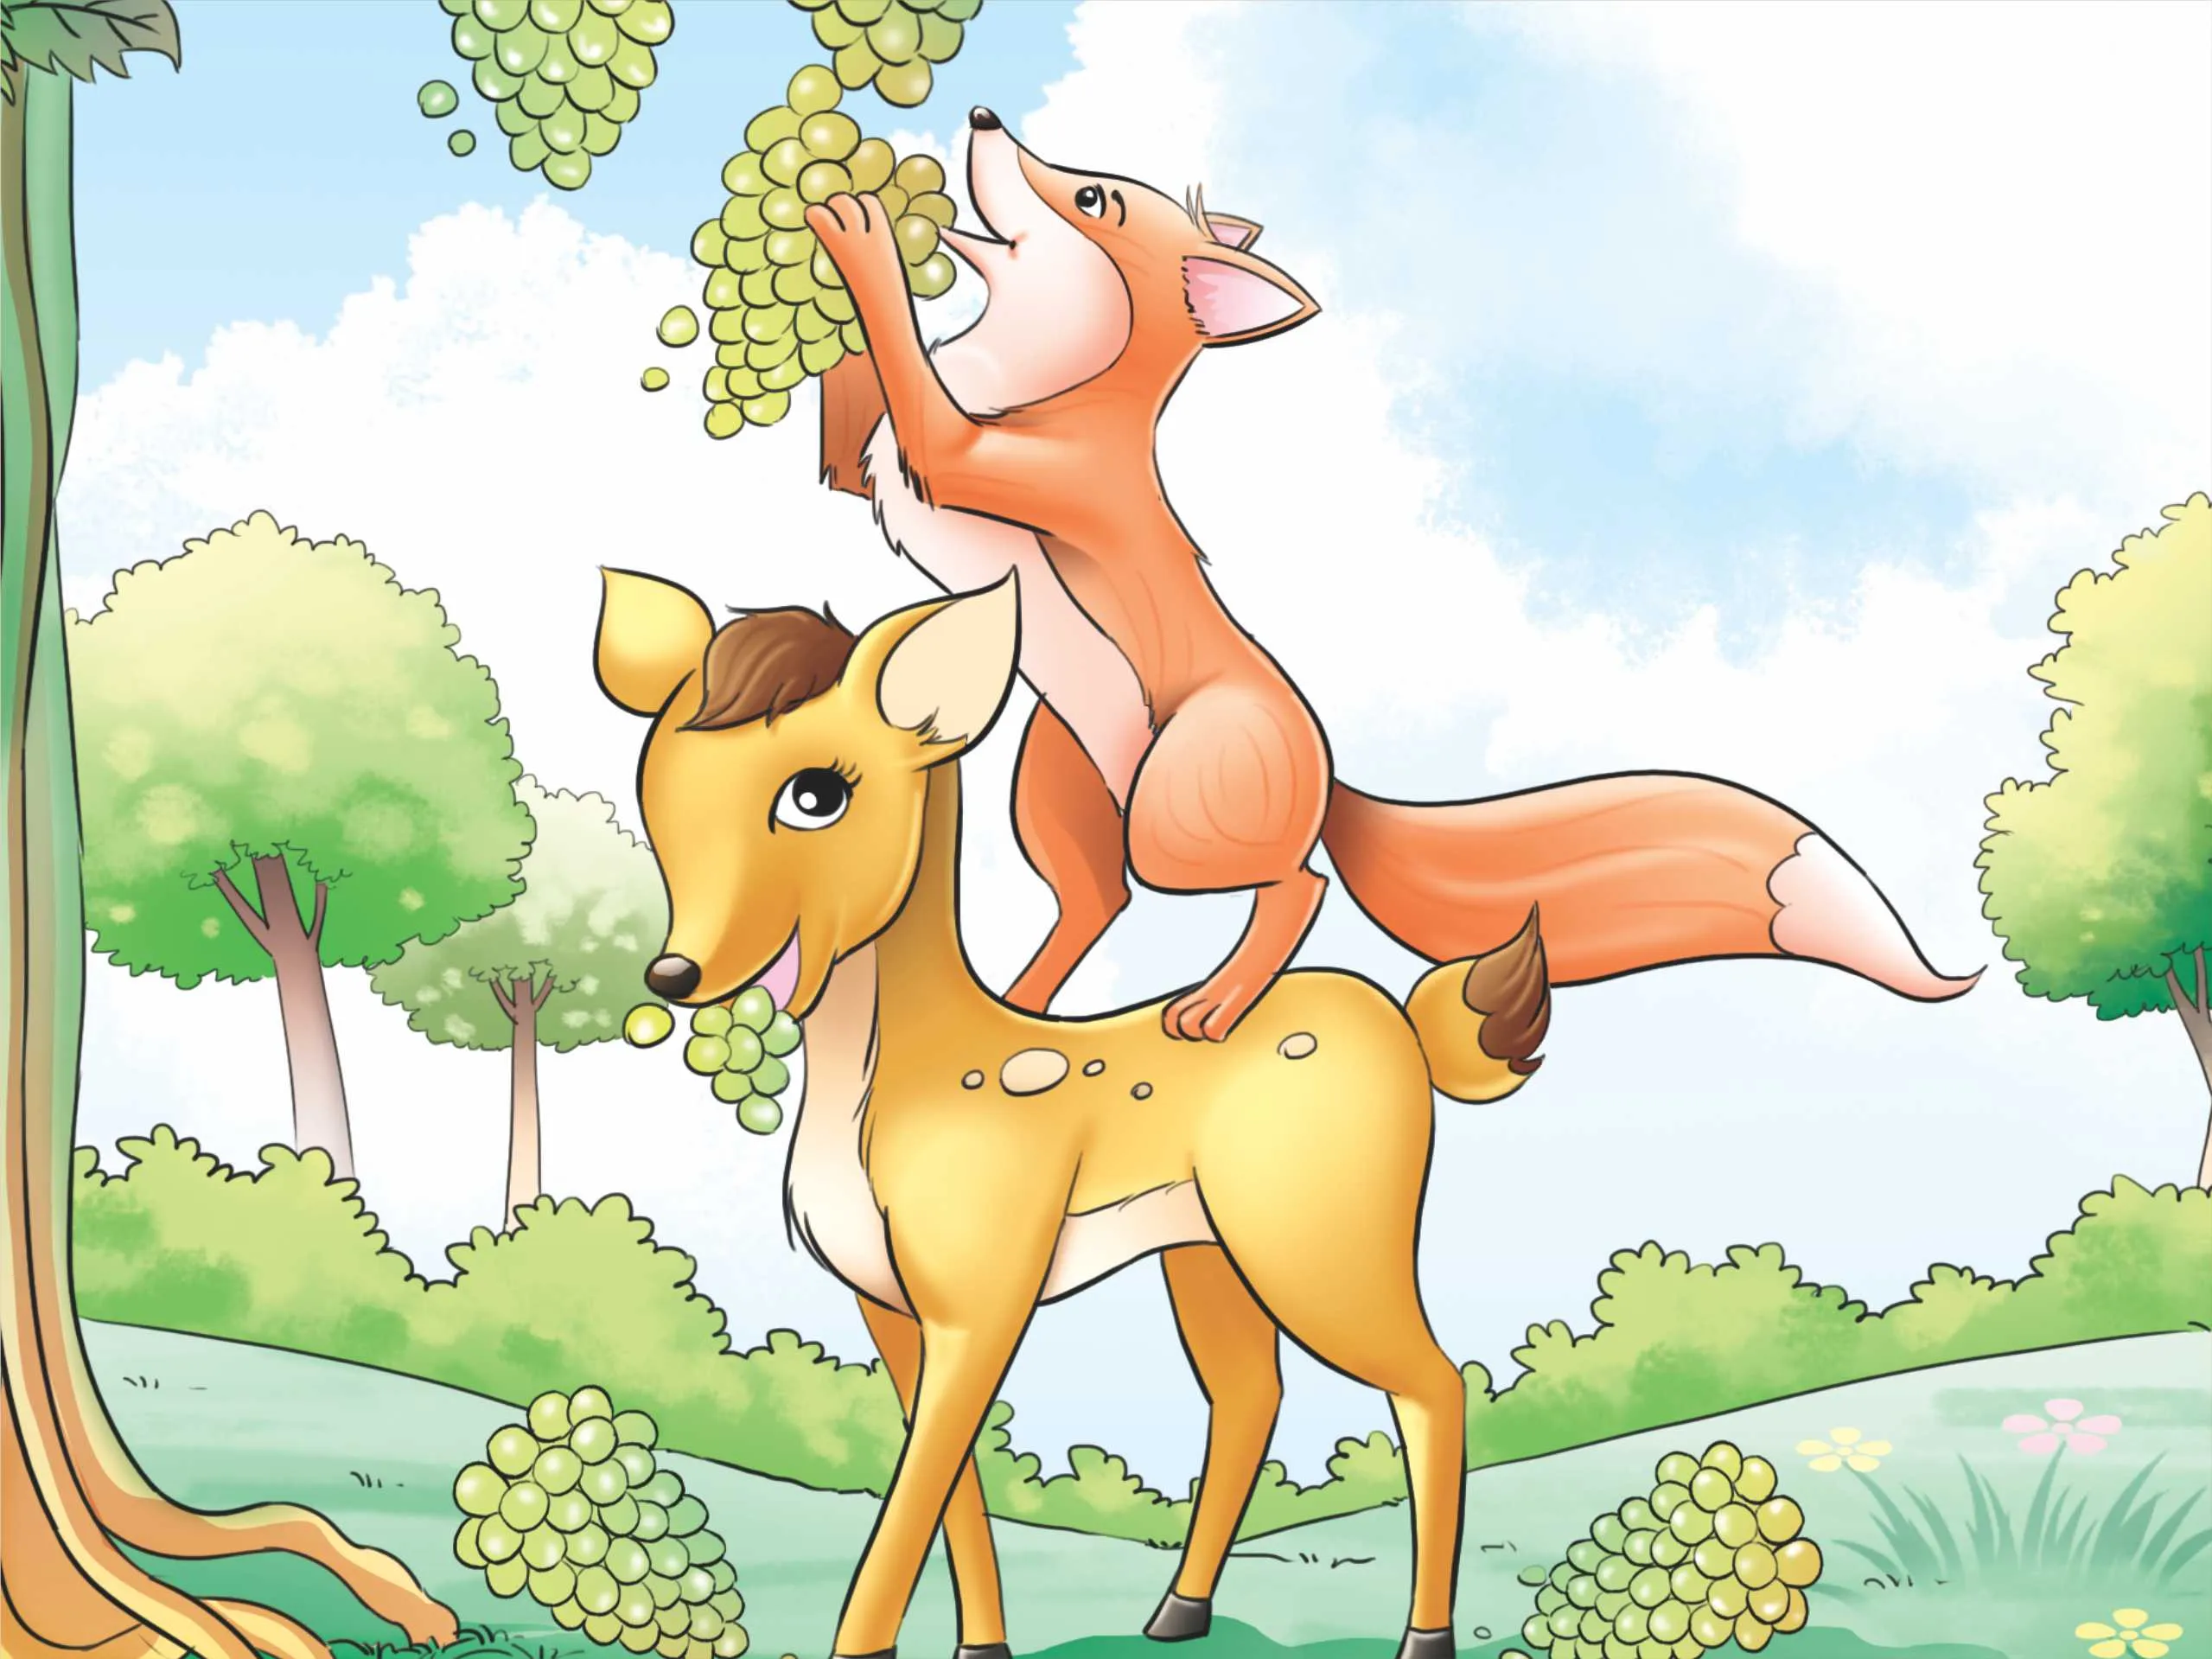 Fox with deer plucking grapes cartoon image